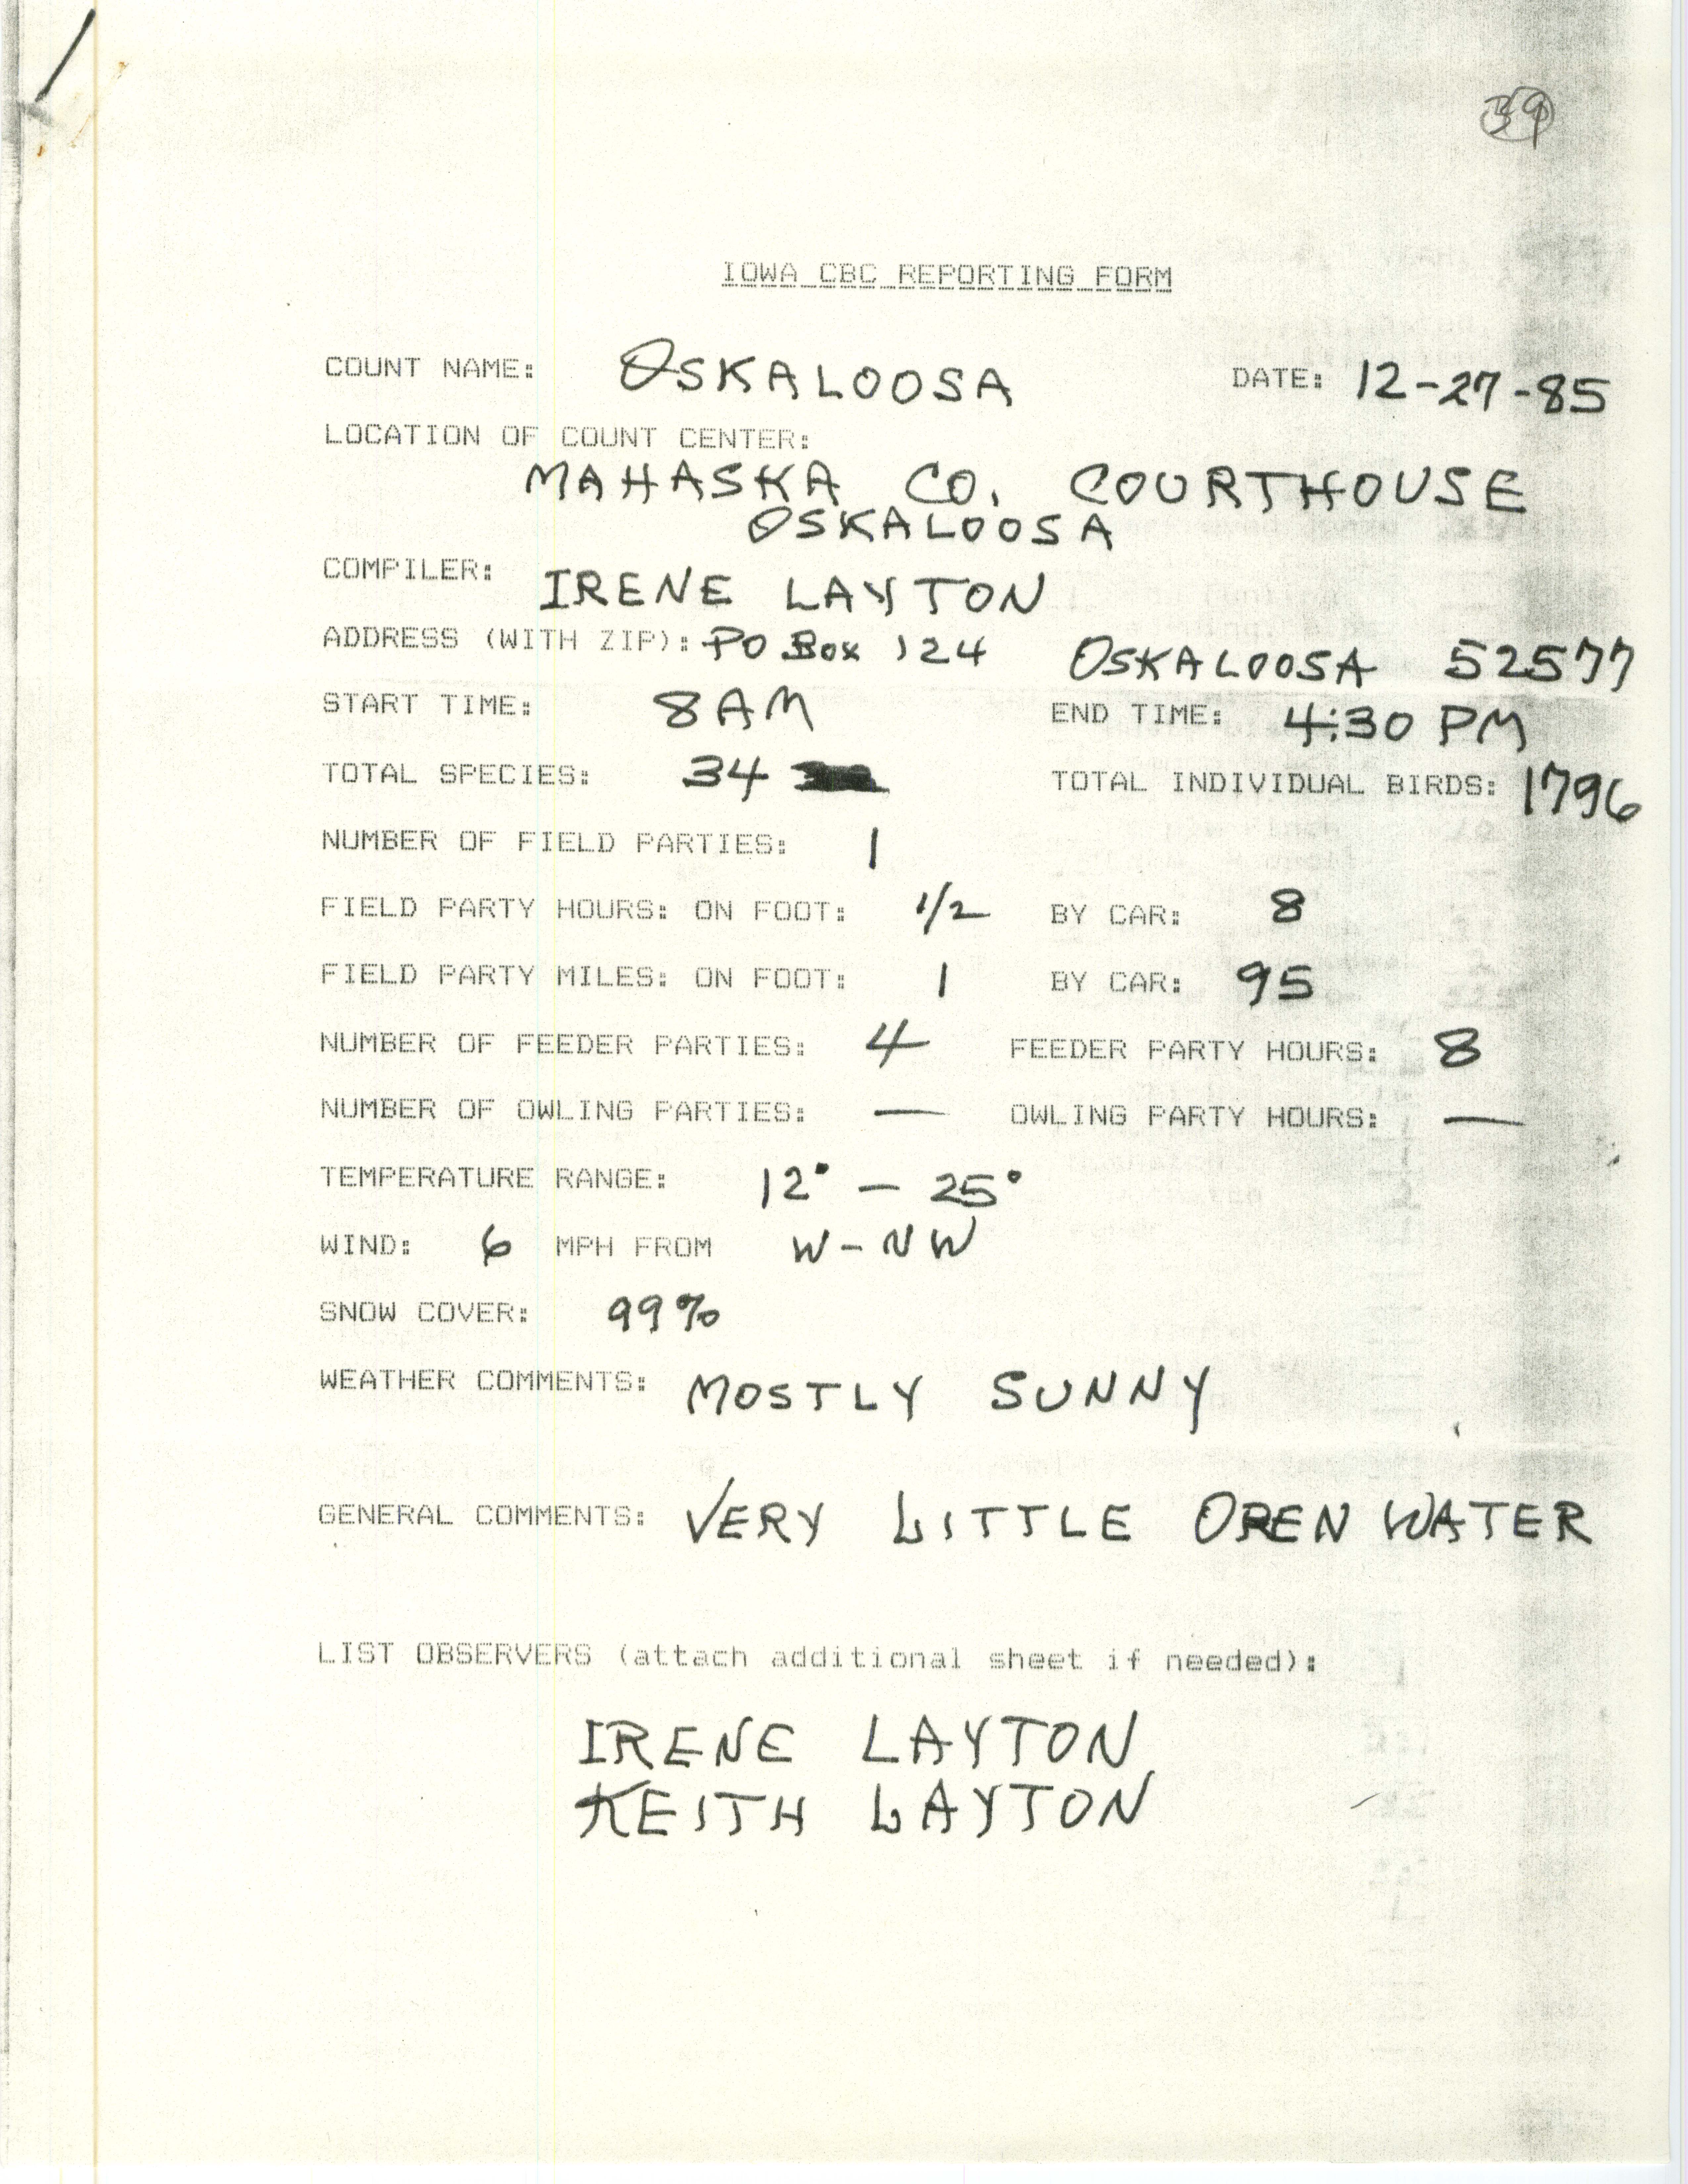 Iowa CBC reporting form, Oskaloosa, December 27, 1985